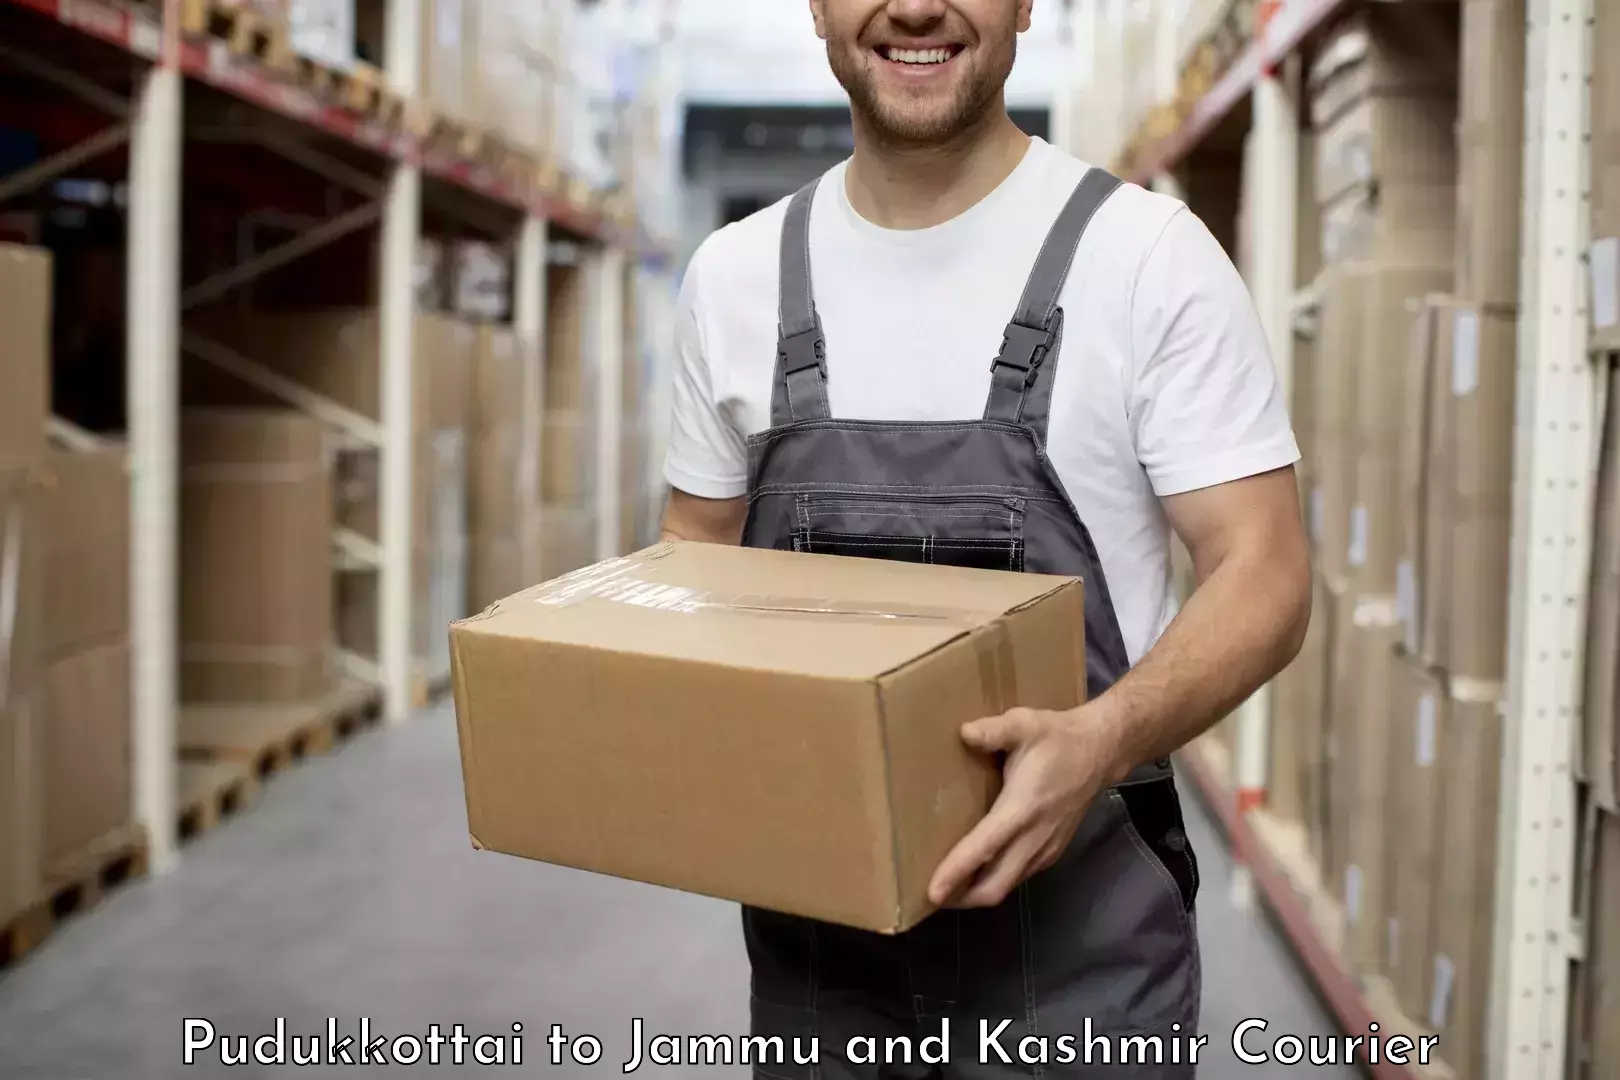 Same-day delivery options Pudukkottai to Srinagar Kashmir